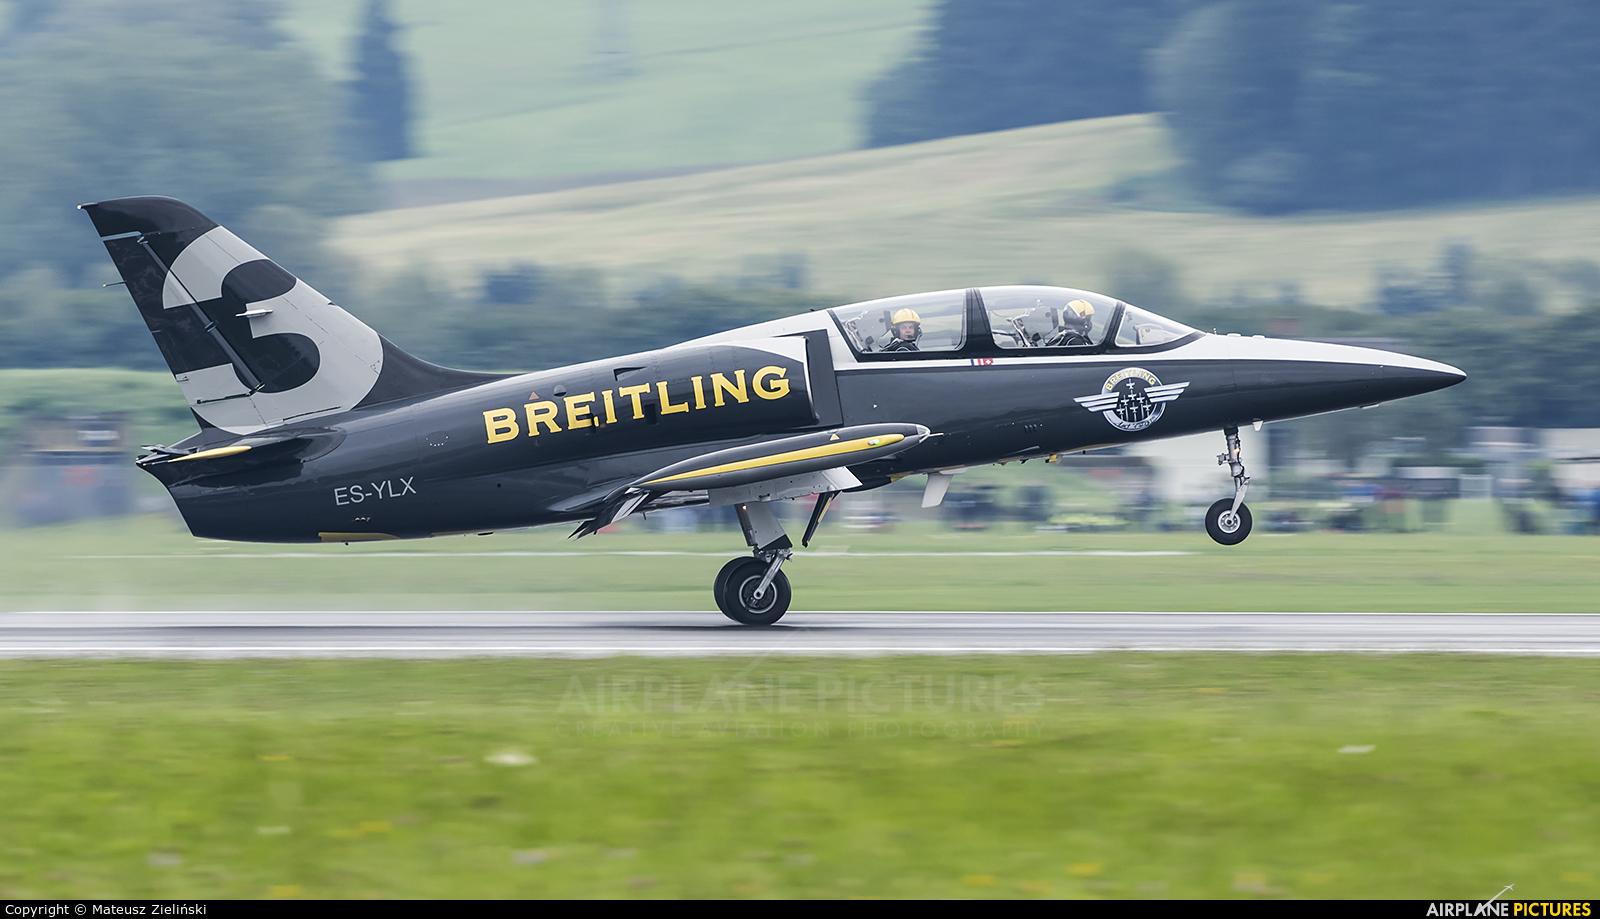 Breitling Jet Team ES-YLX aircraft at Zeltweg